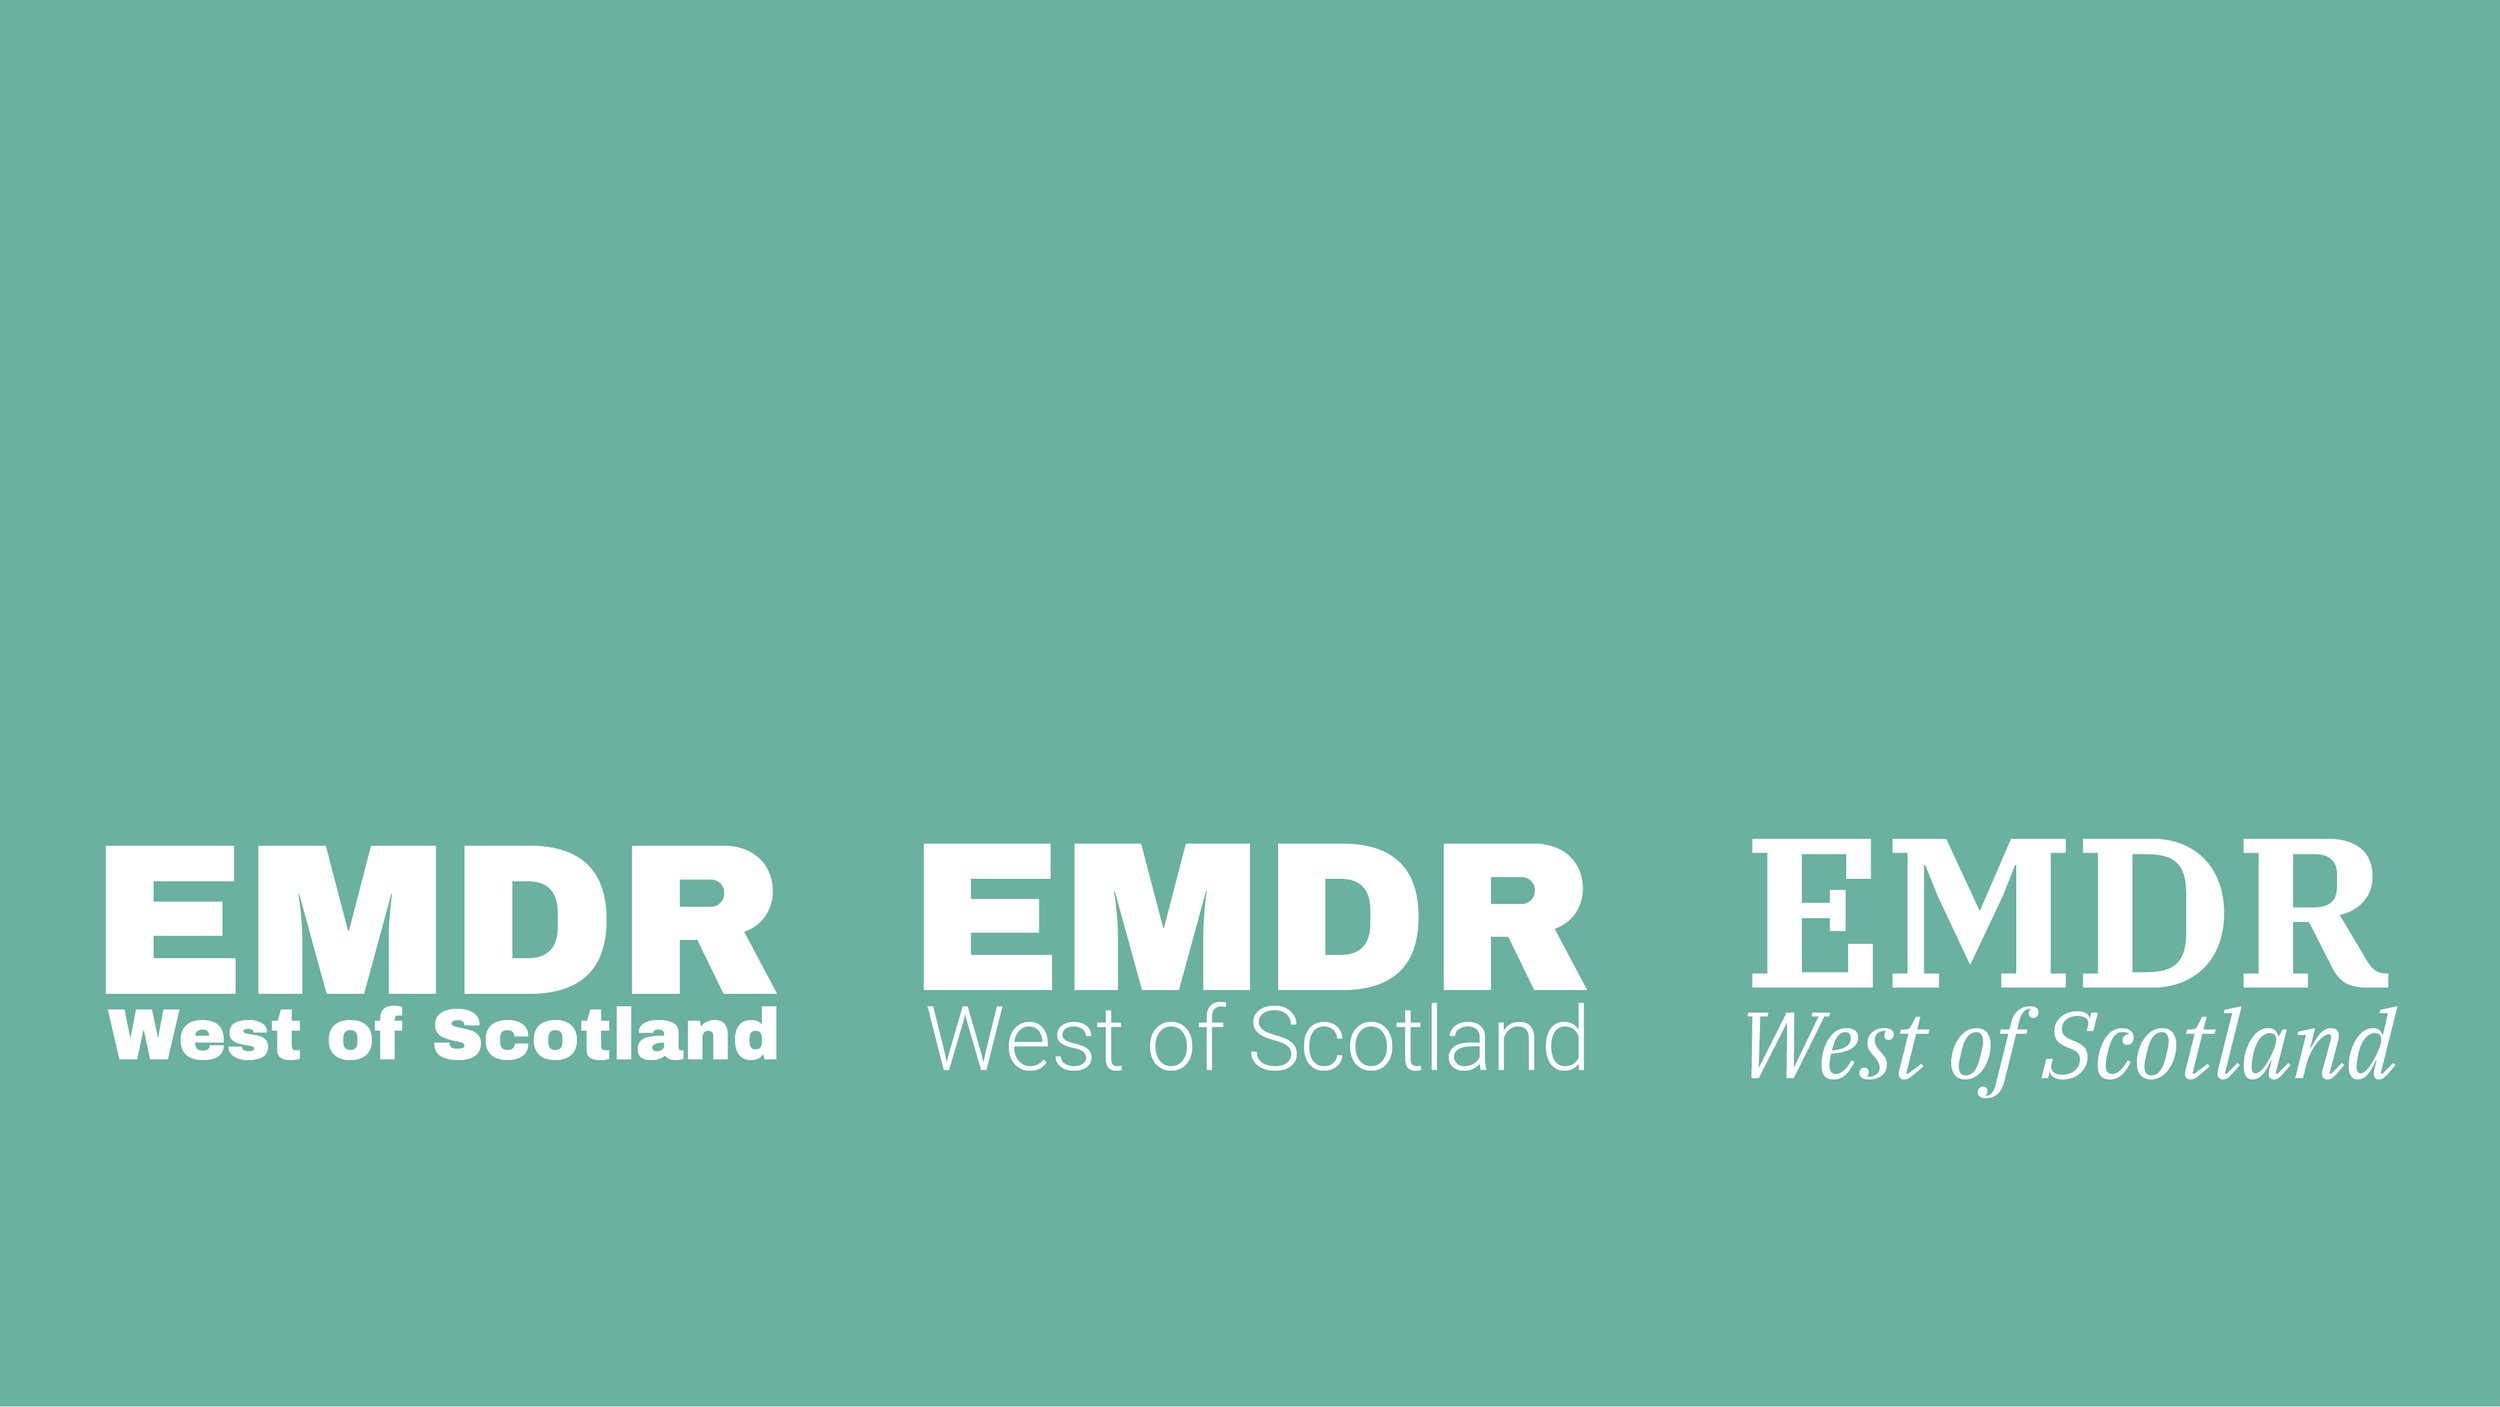 EMDR-graphic versions-06.jpg